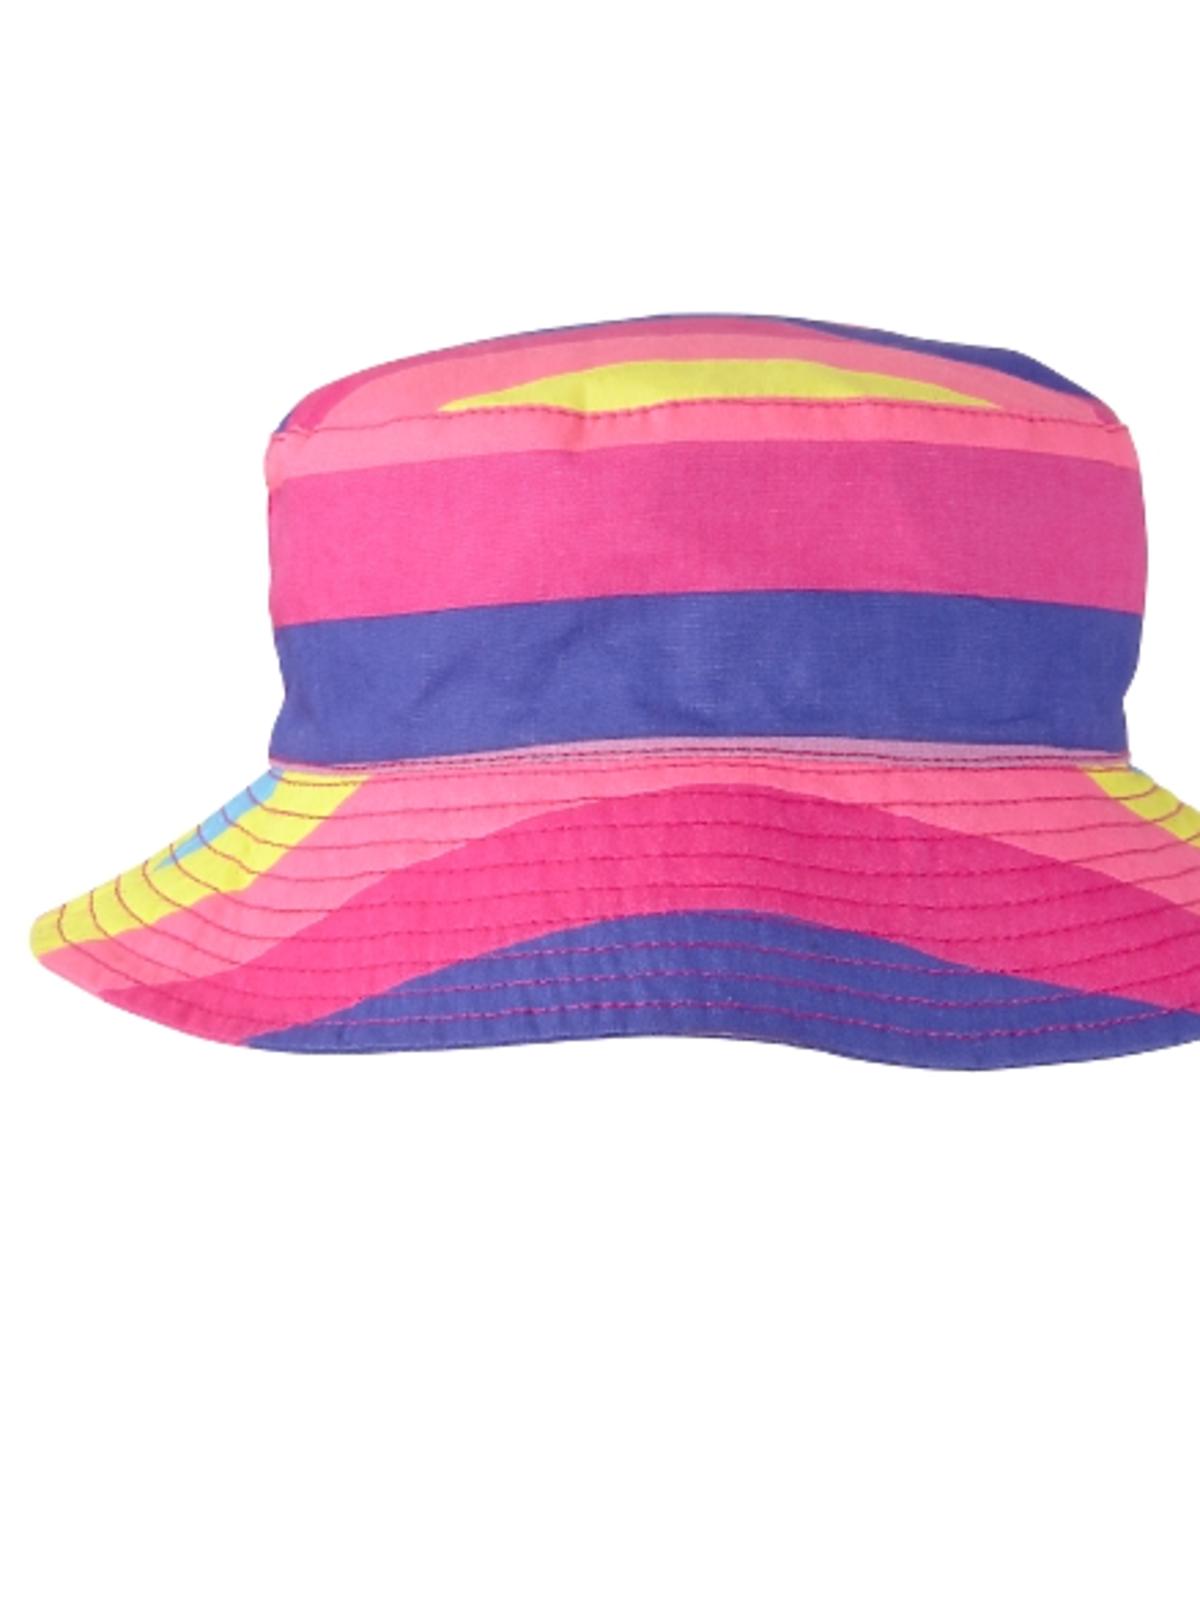 kapelusz dla dziecka na lato